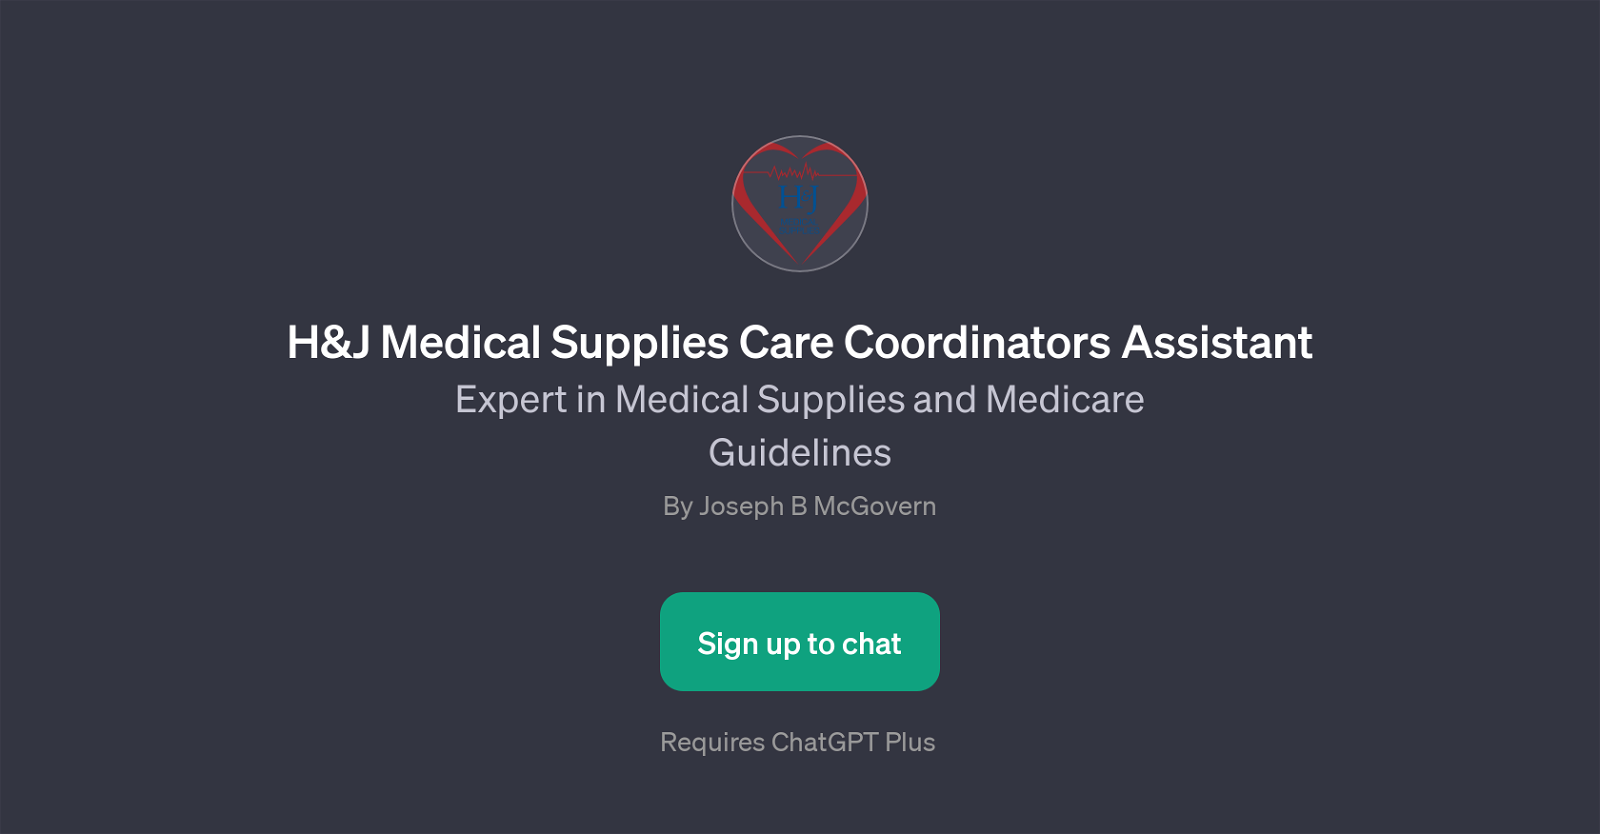 H&J Medical Supplies Care Coordinators Assistant website